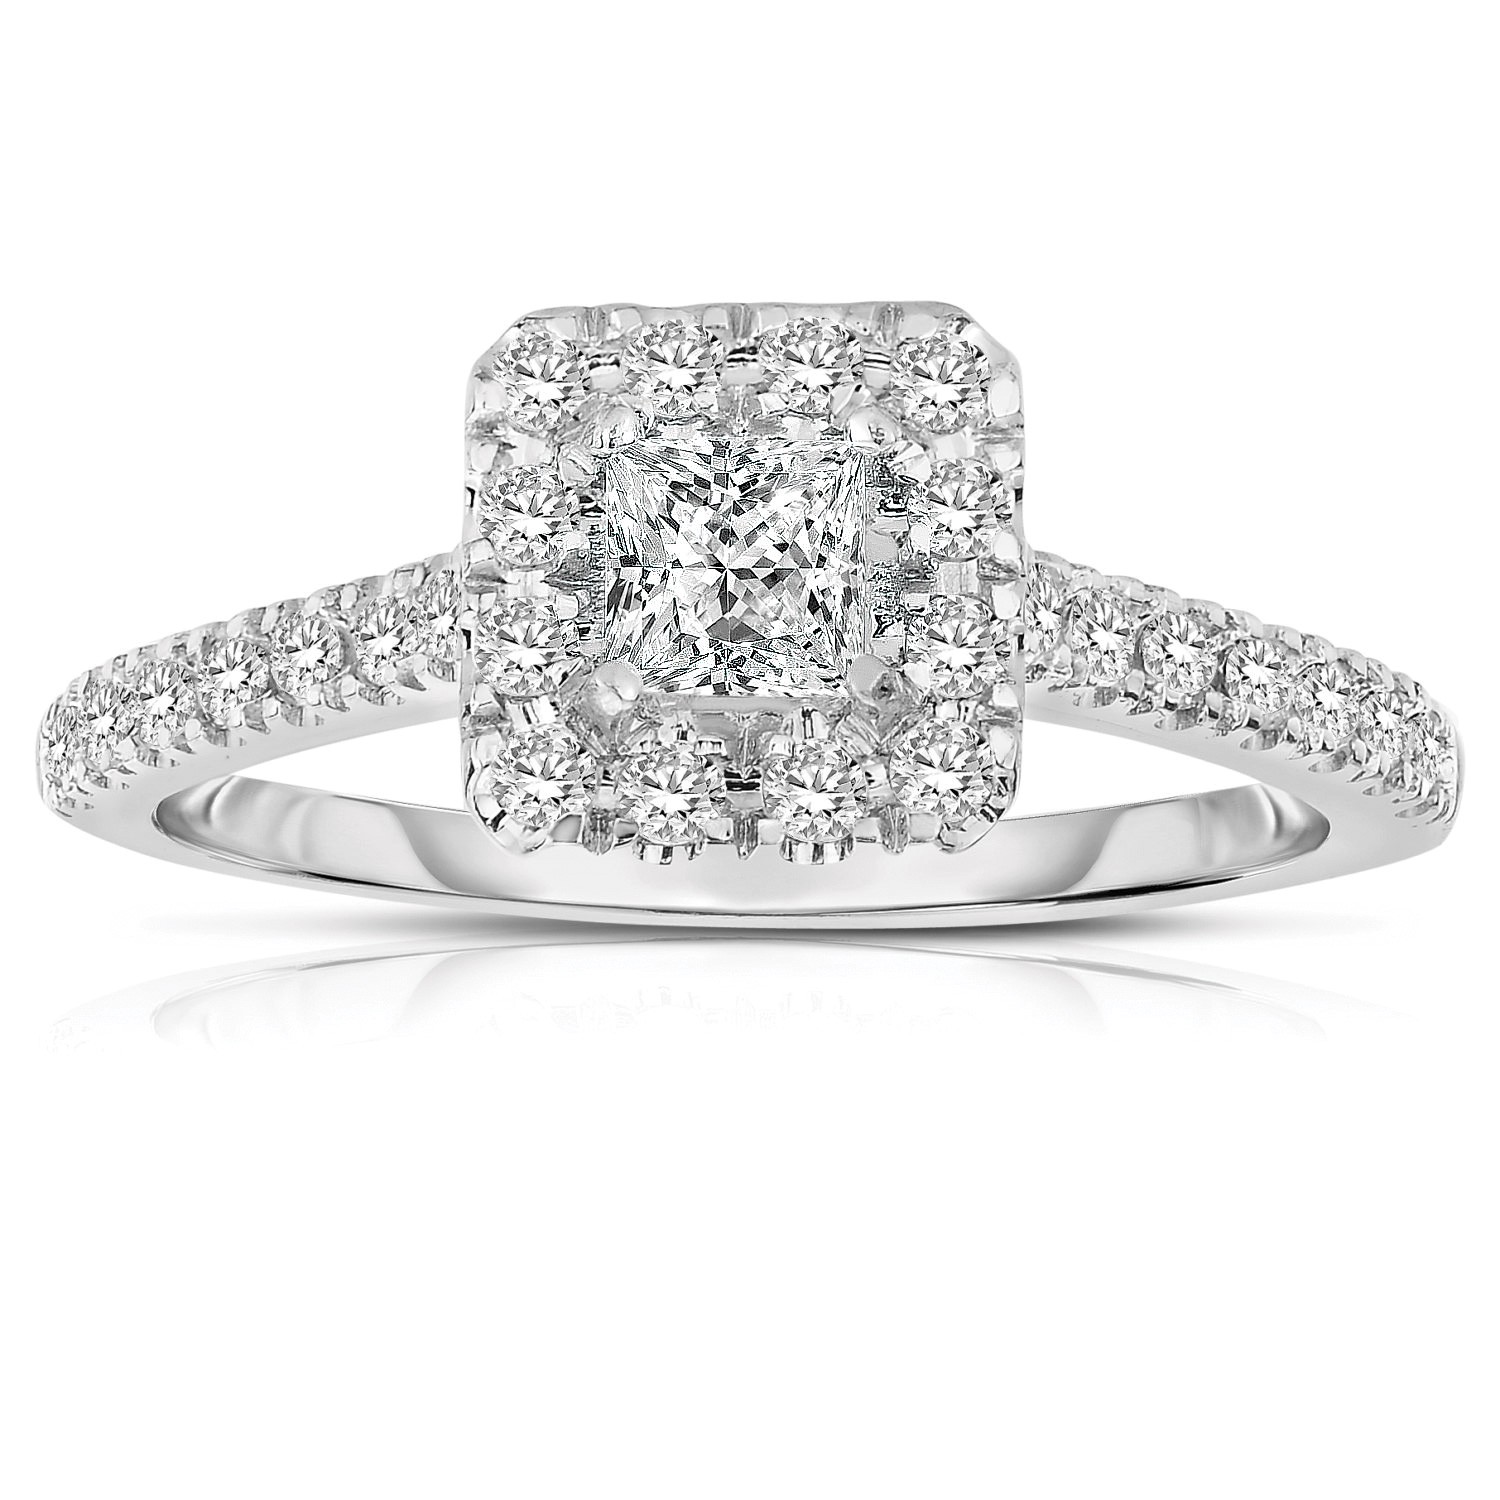 Half Carat Princess Cut Halo Diamond Engagement Ring In White Gold